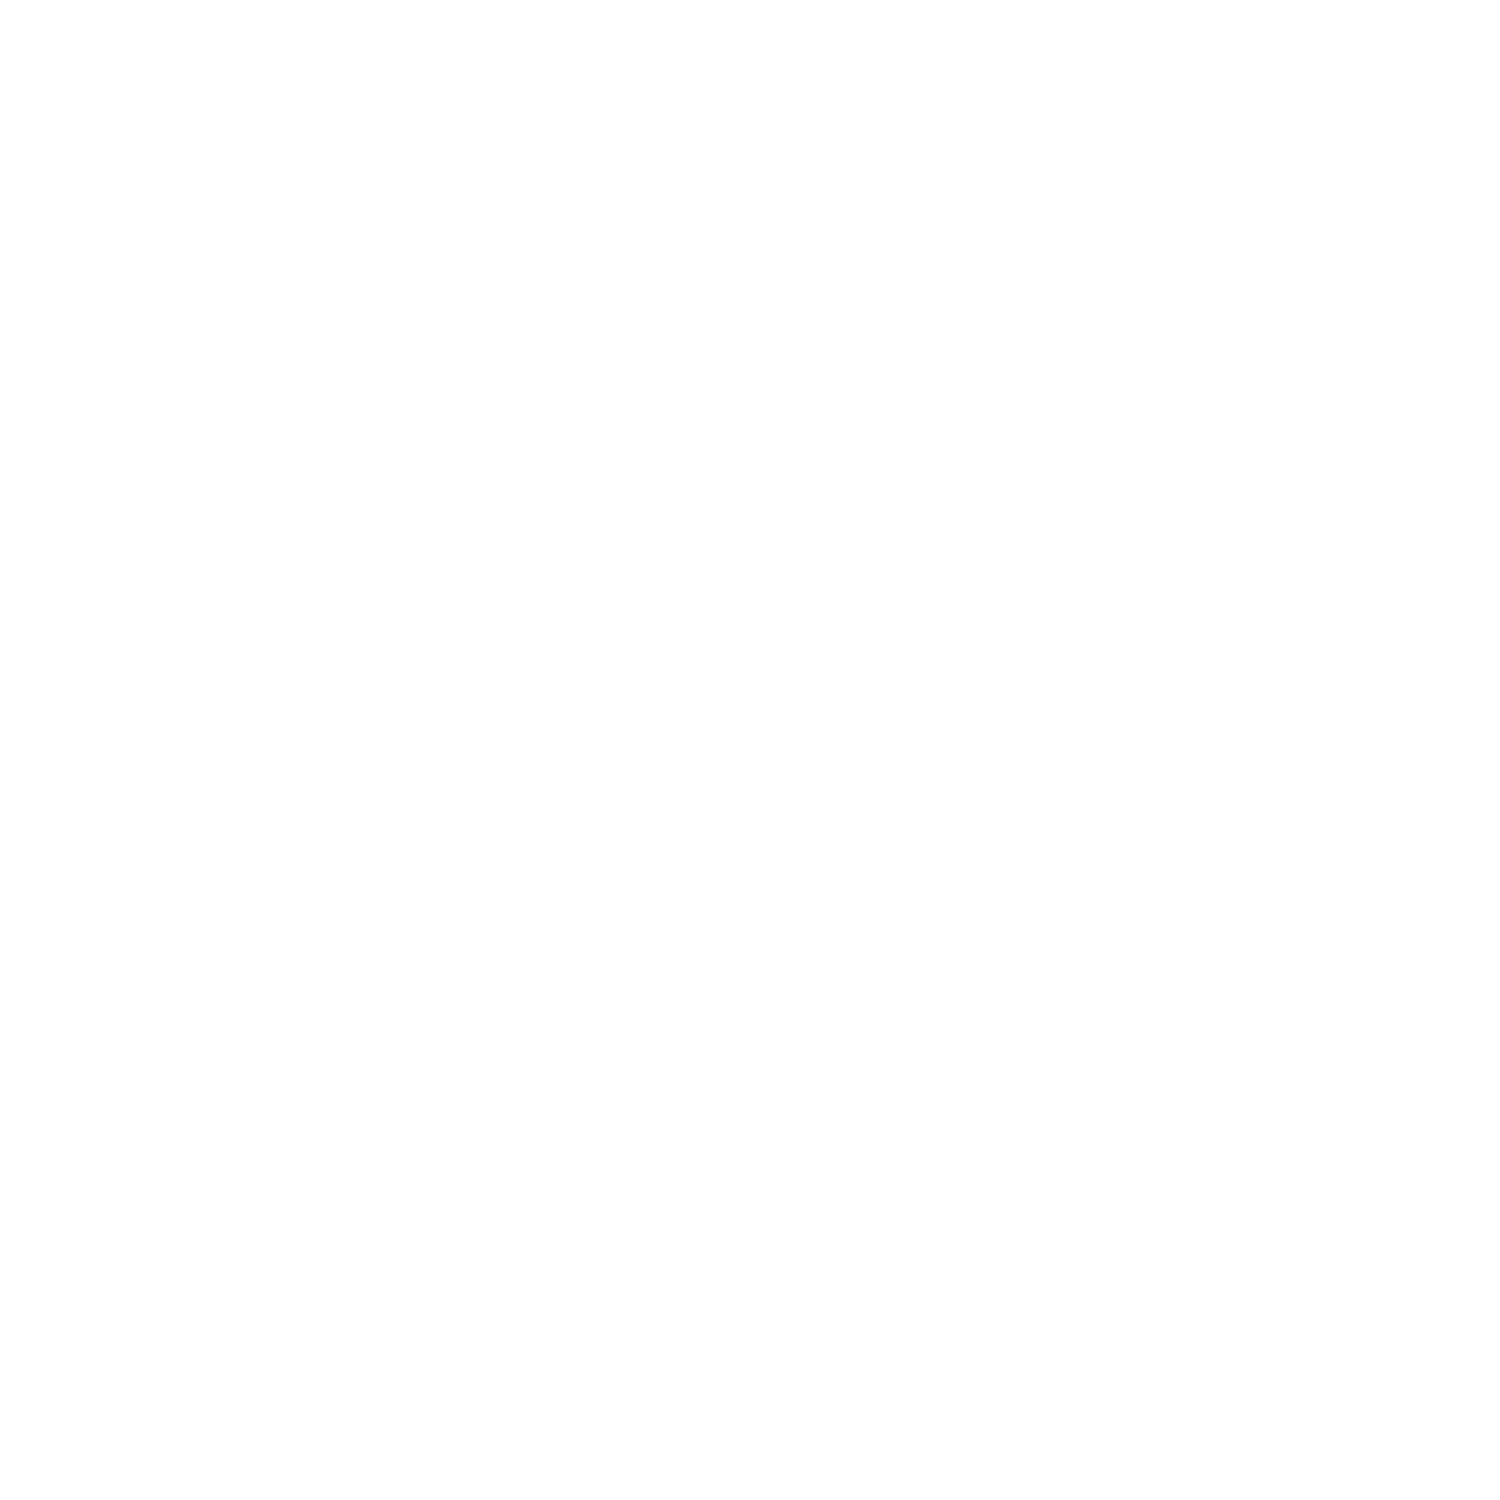 THE TRUTH ORGANIZATION